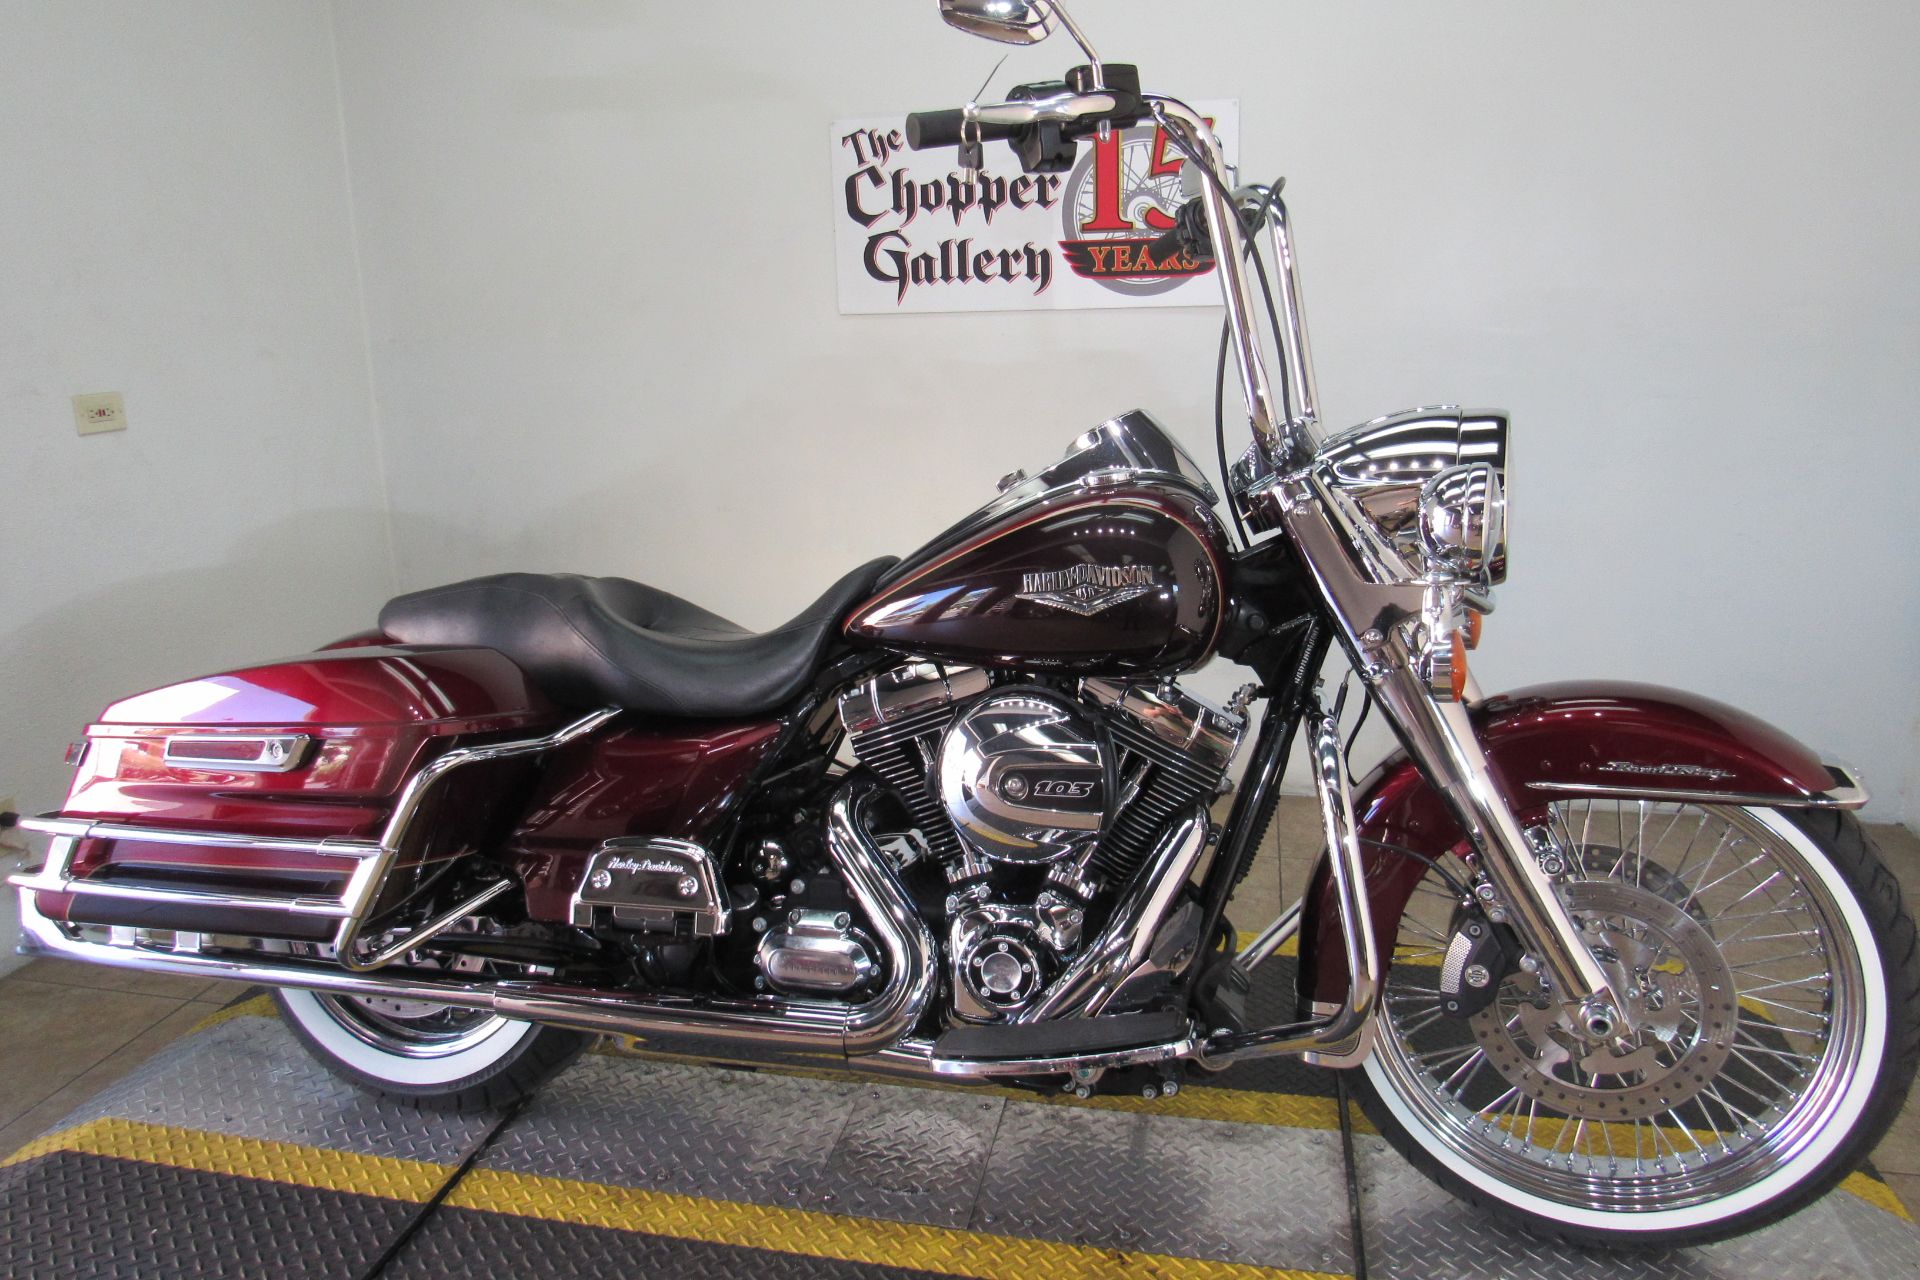 2015 Harley-Davidson Road King® in Temecula, California - Photo 3